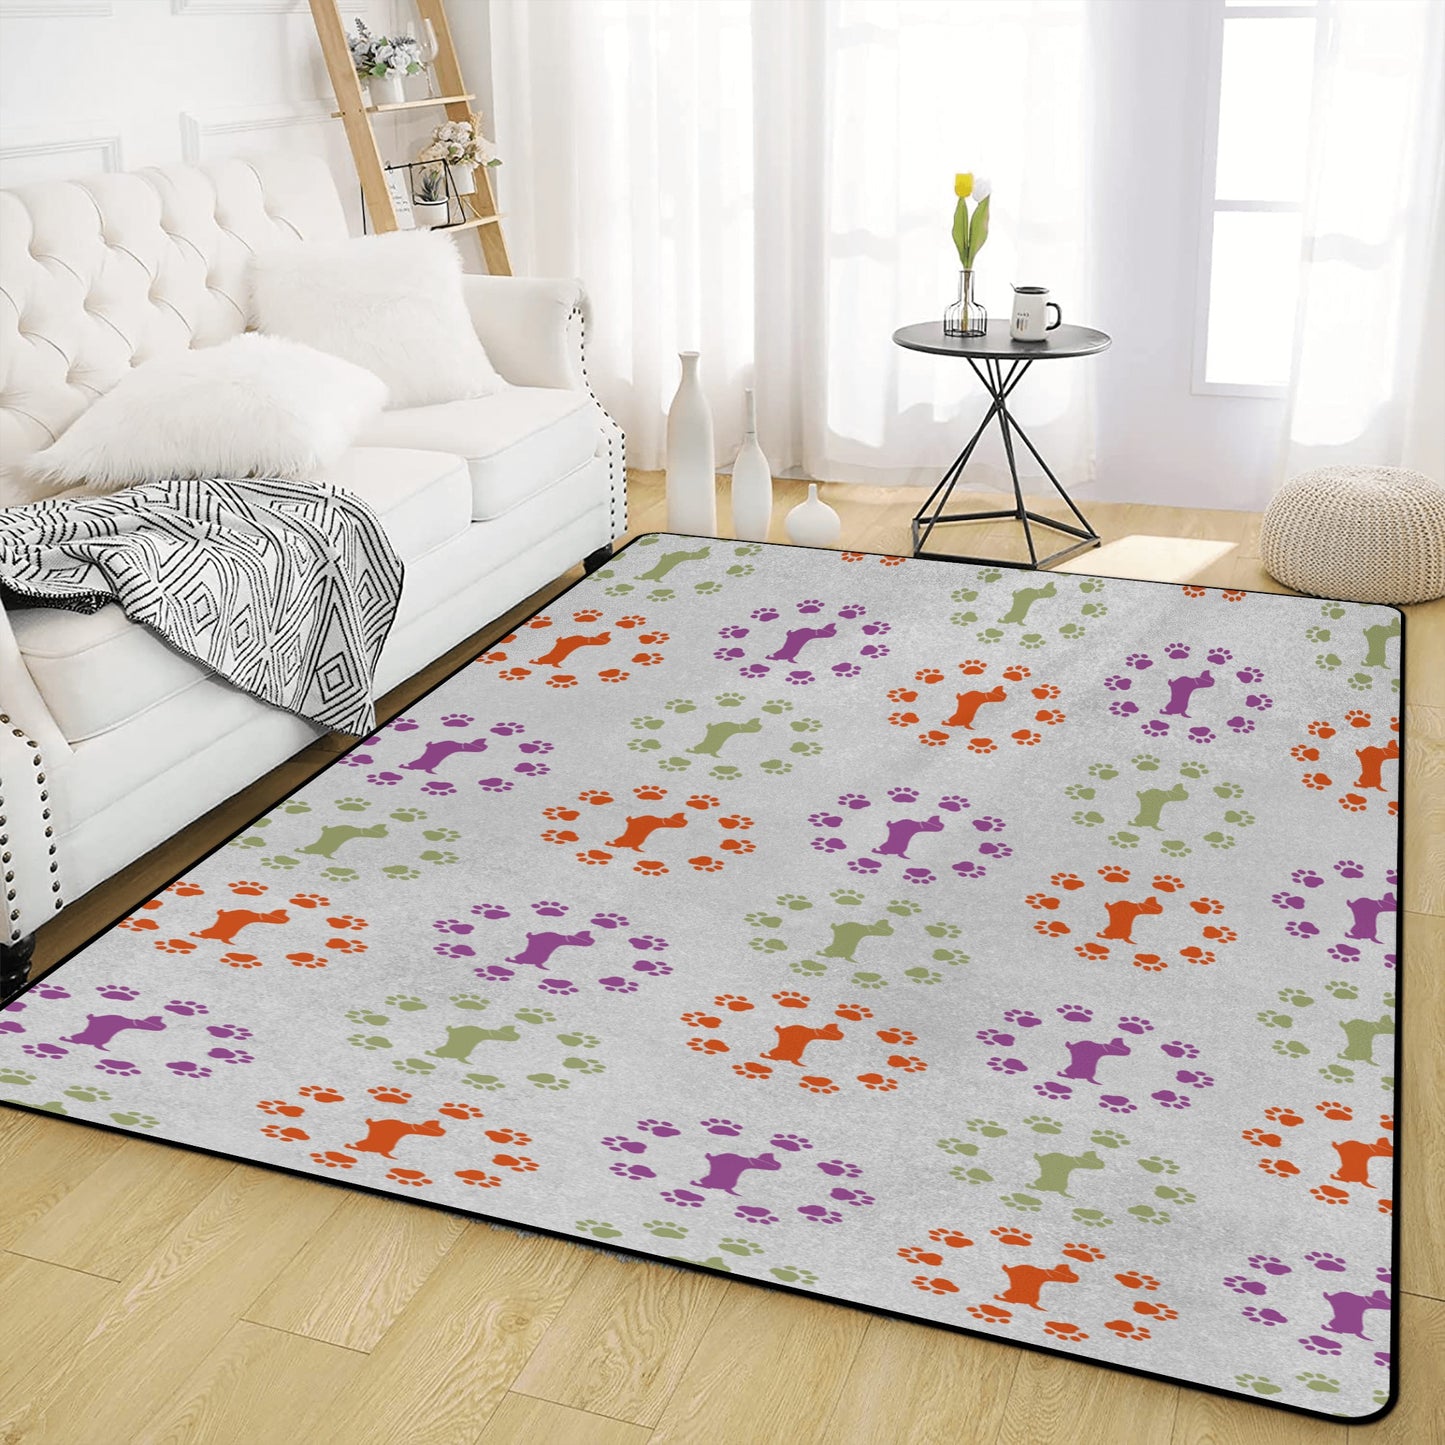 Deliah - Living Room Carpet Rug